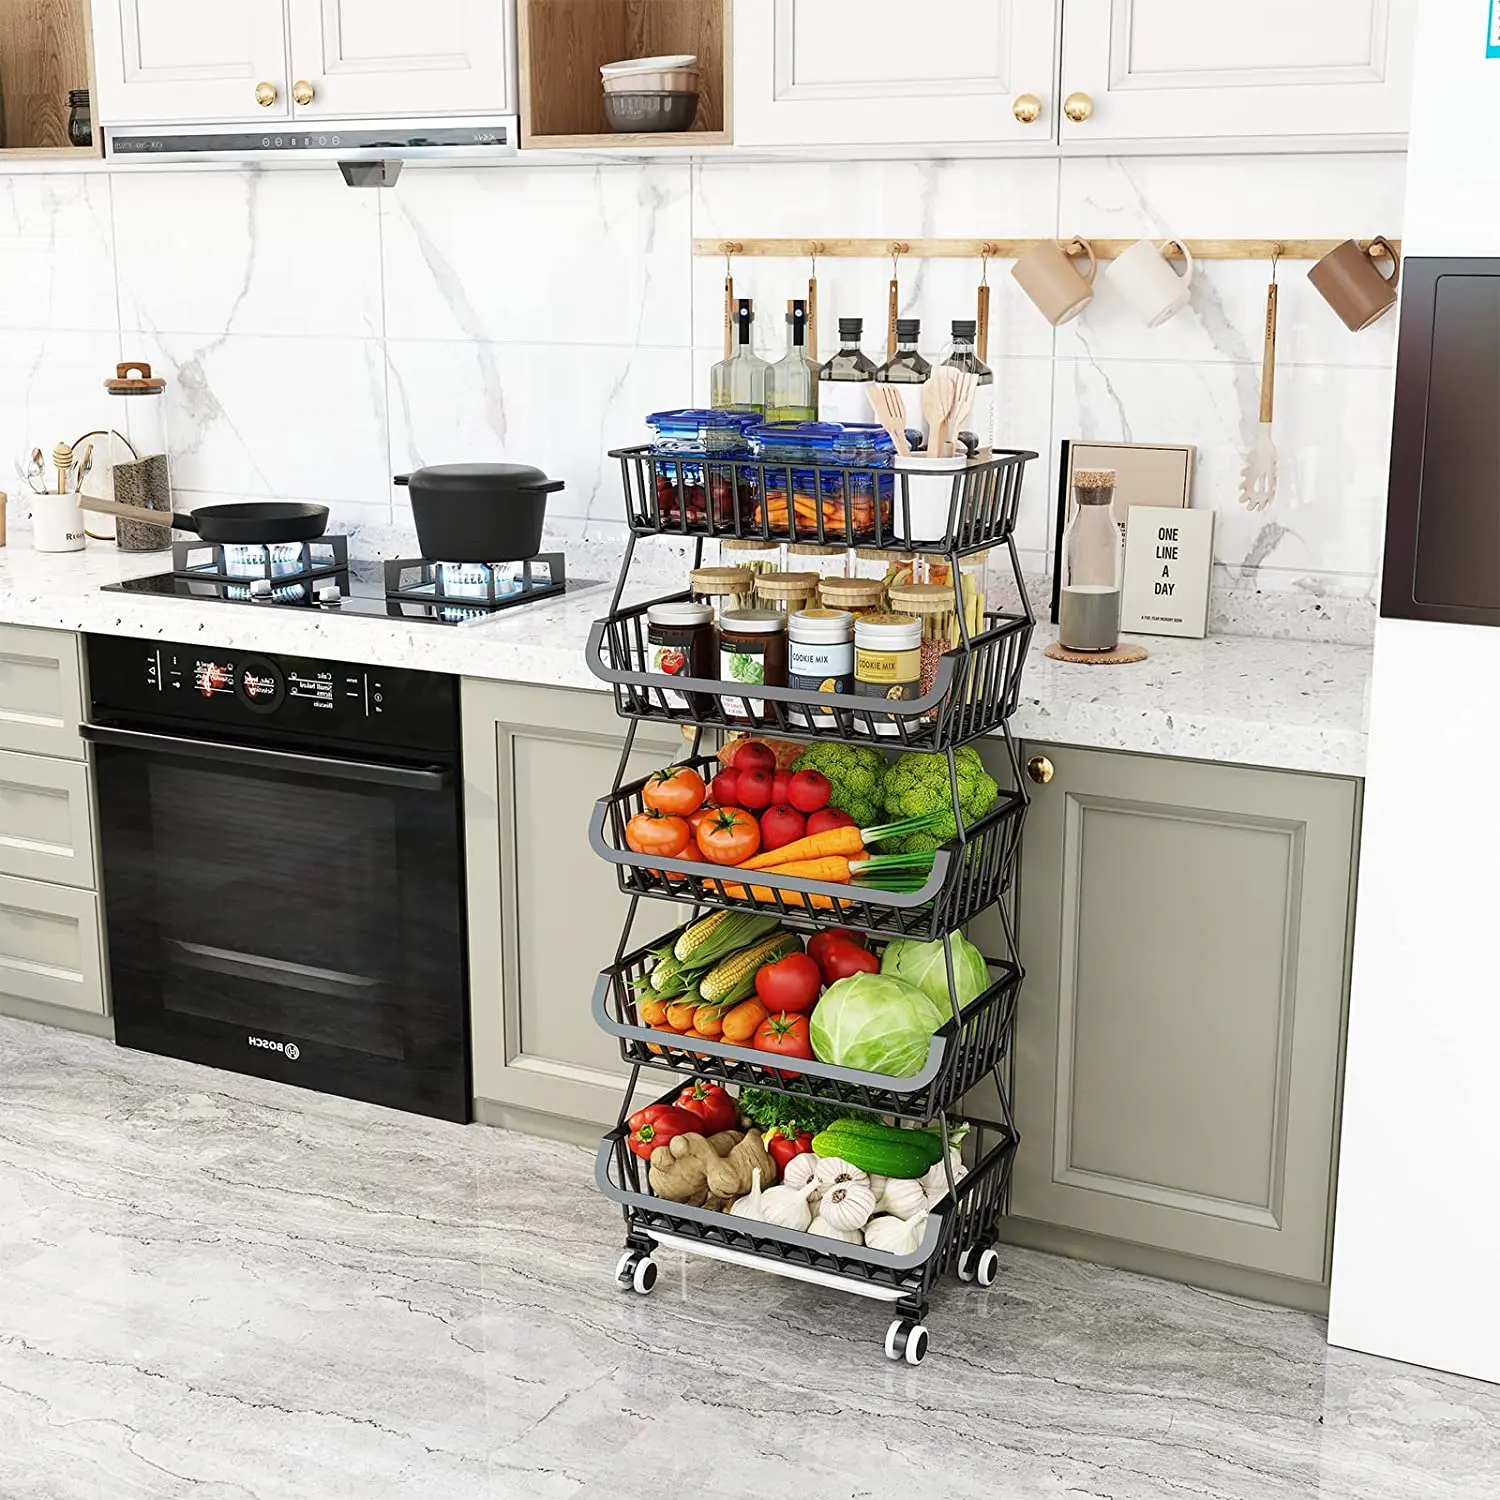 2022 new household kitchen supplies storage rack multi floor kitchen shelf fruit and vegetable basket